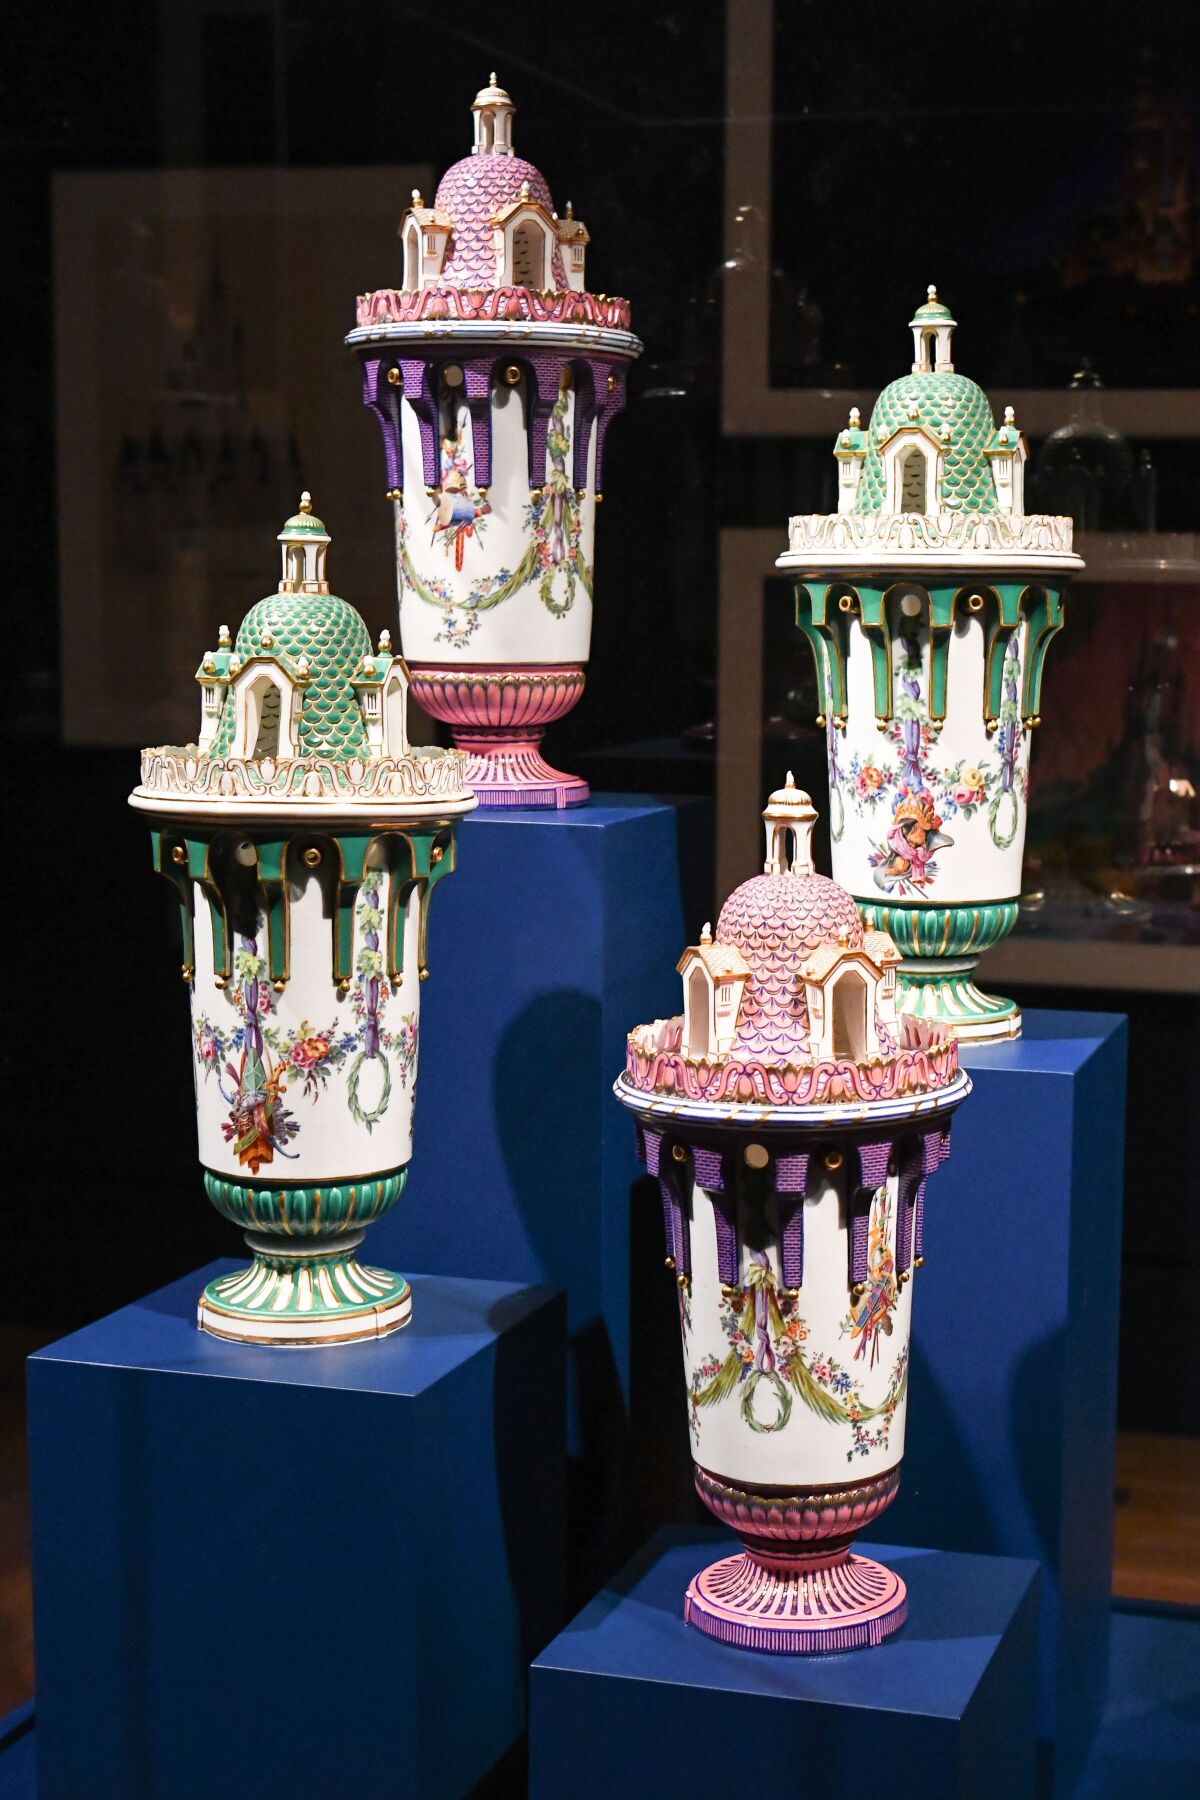 Four tower vases on pedestals.